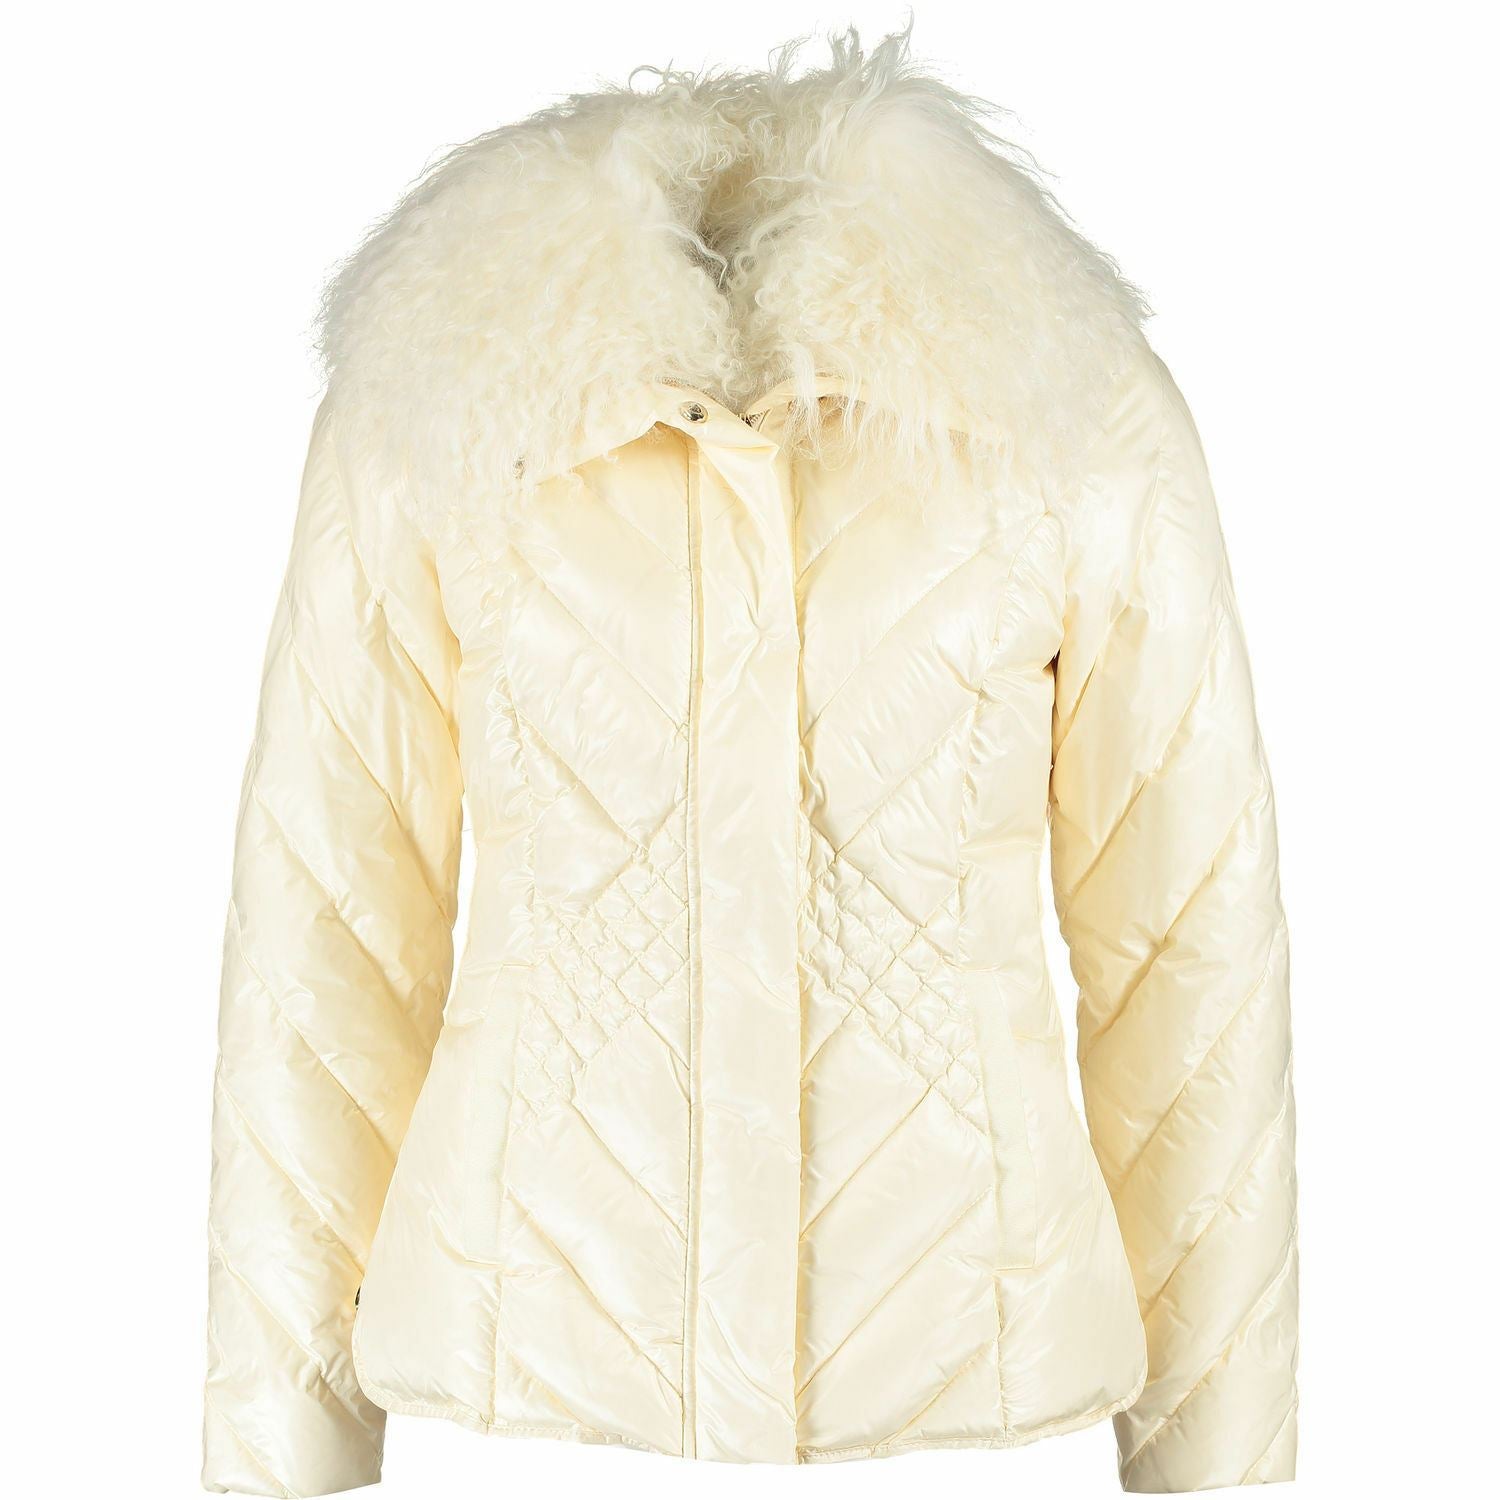 TRUSSARDI Women's Cream Quilted Faux Fur Collar Jacket, UK 6 UK 8